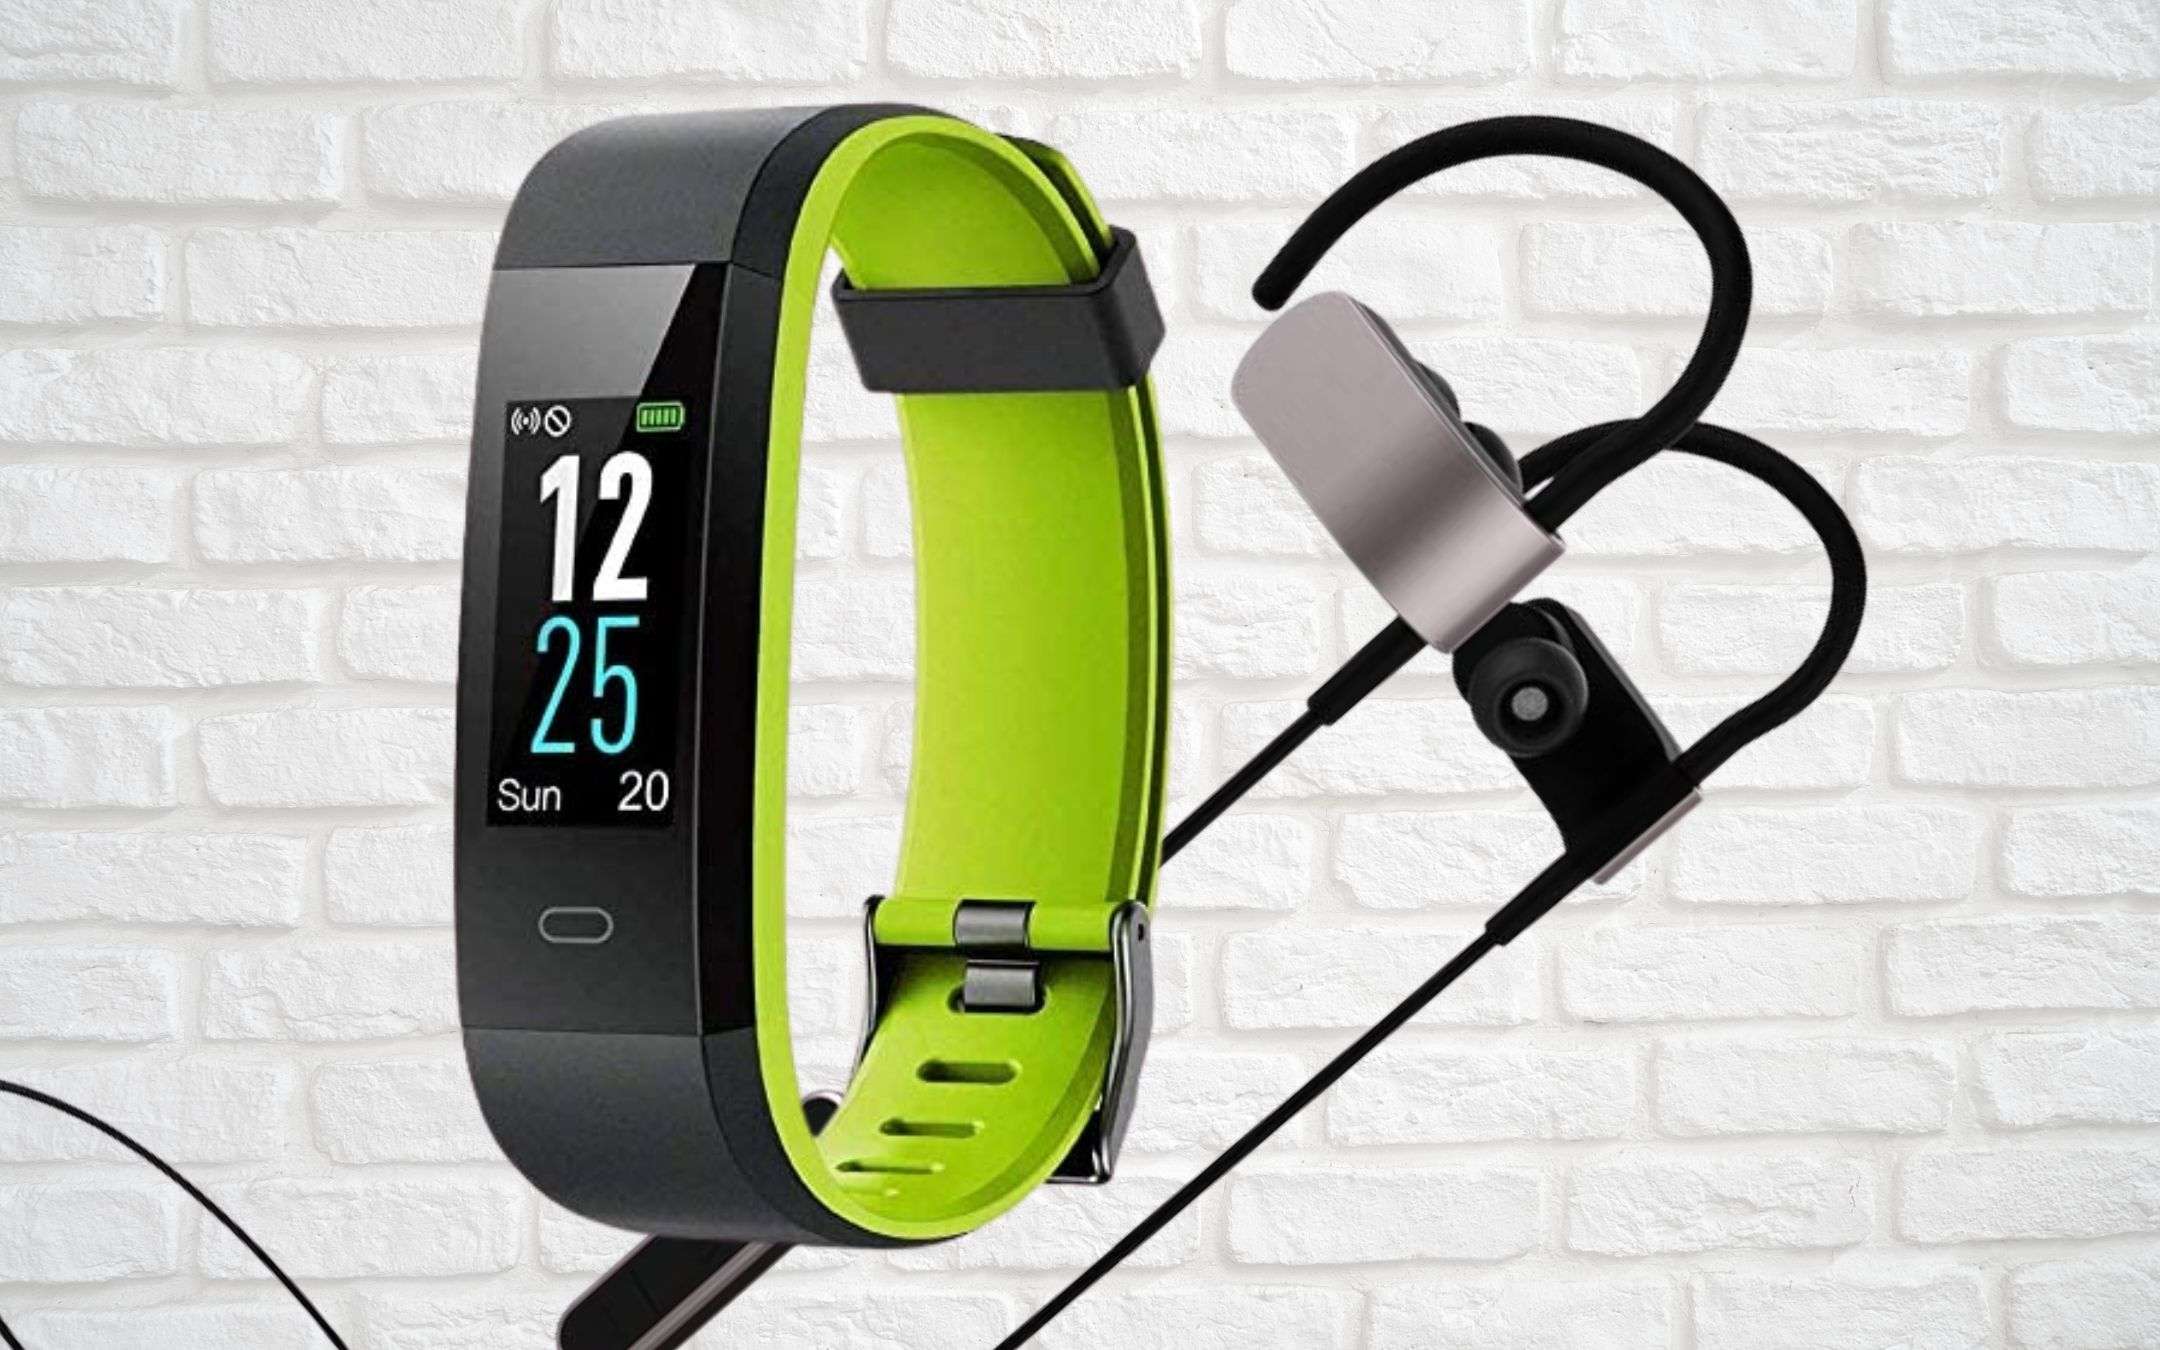 Smartband + cuffie Bluetooth: bundle a 25€ su Amazon